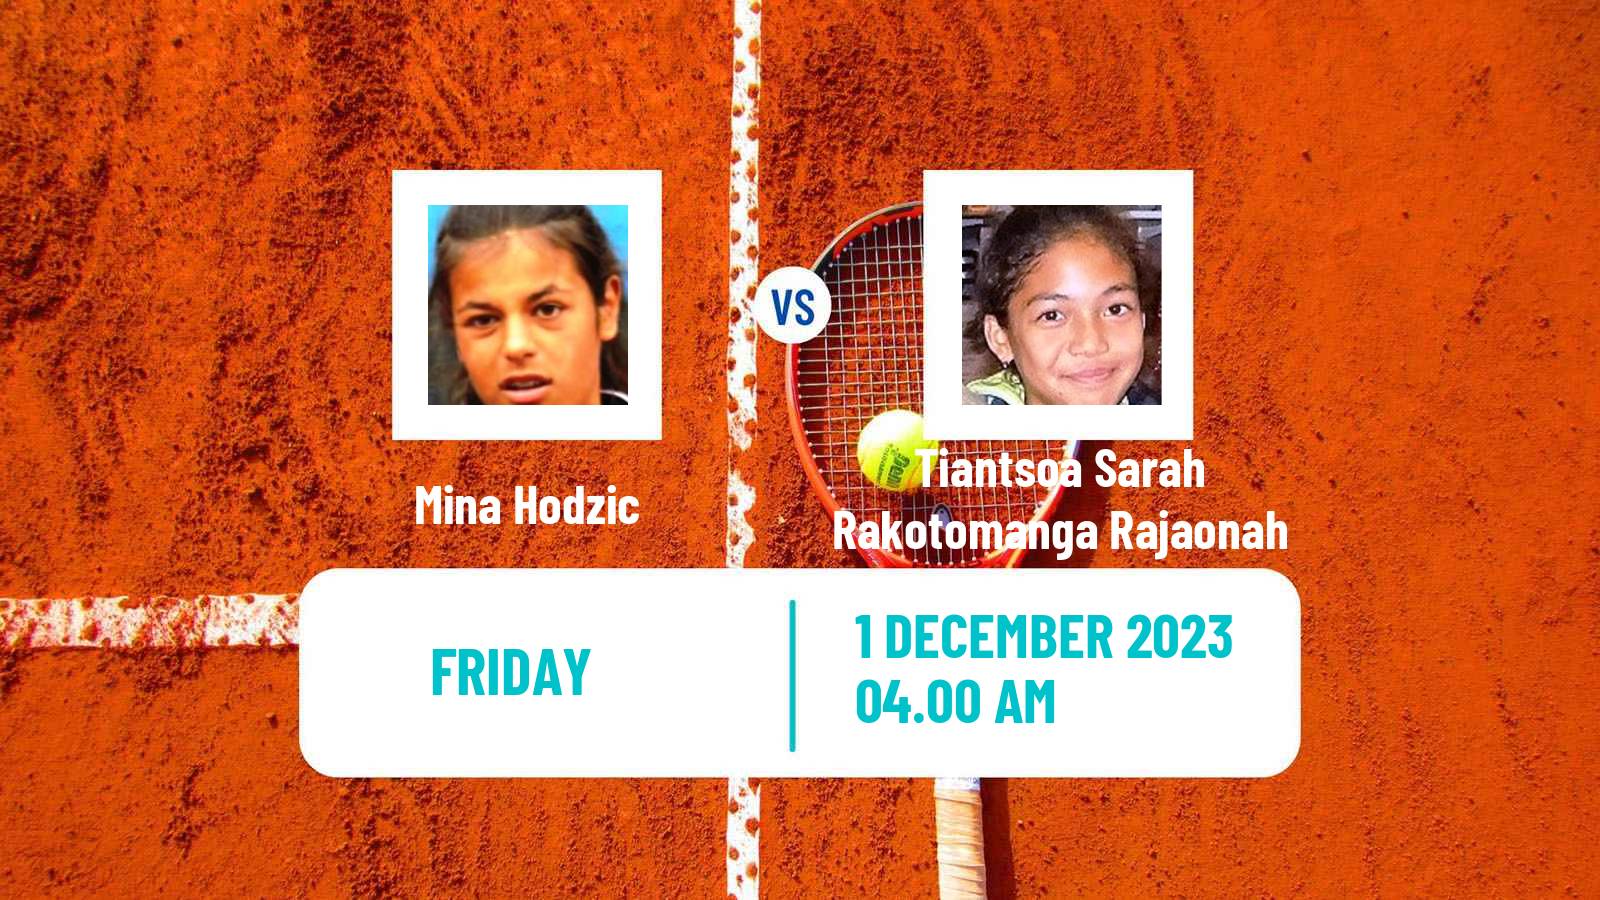 Tennis ITF W15 Valencia Women Mina Hodzic - Tiantsoa Sarah Rakotomanga Rajaonah